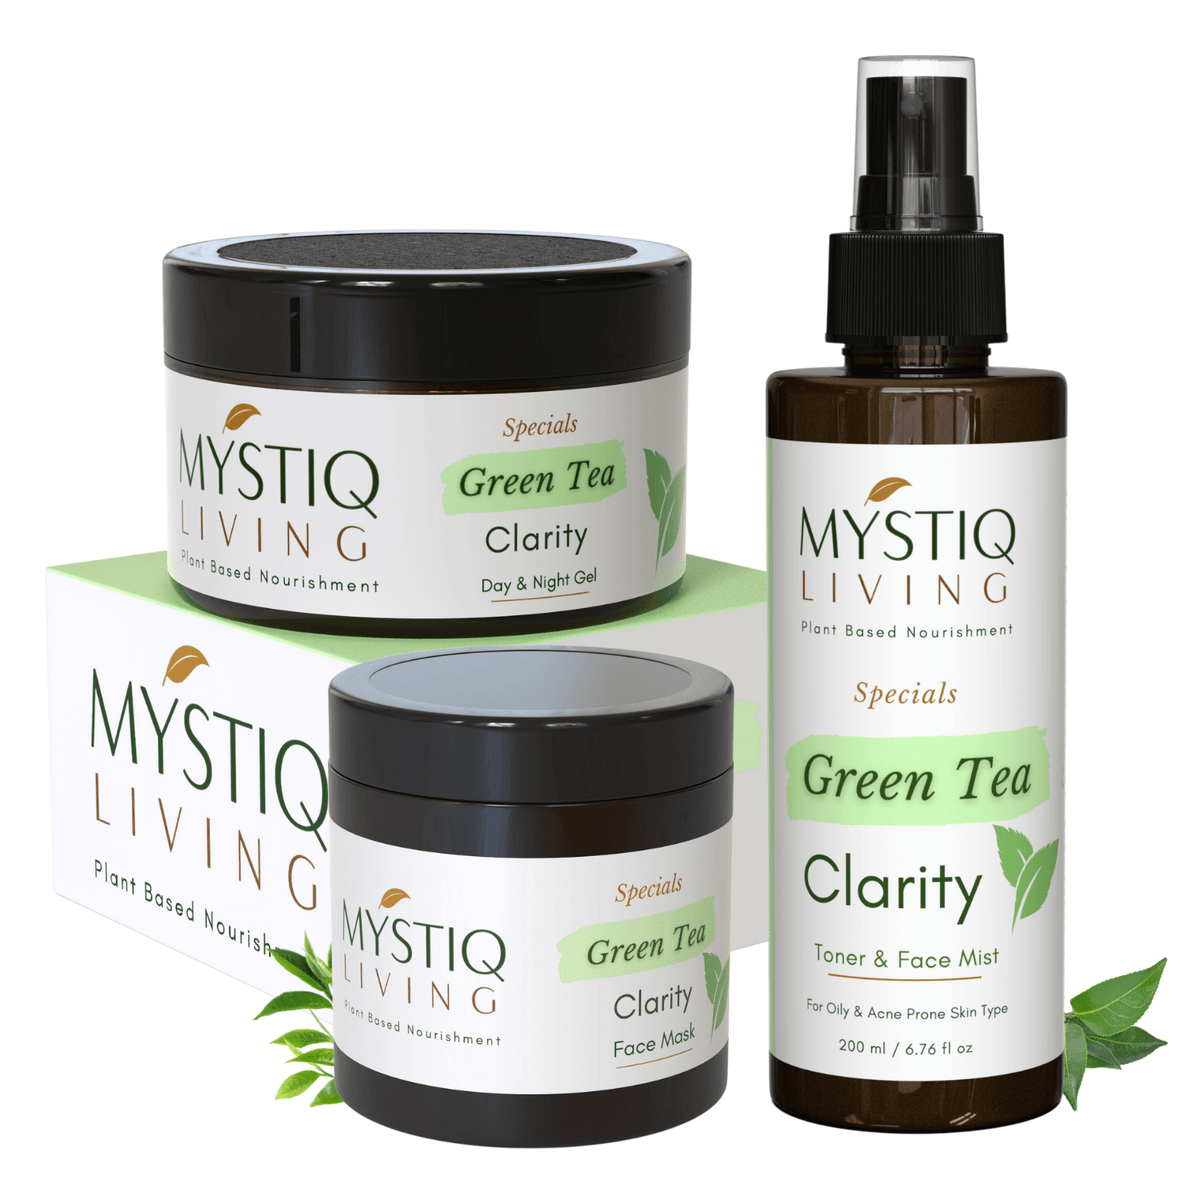 Green Tea Clarity Acne Kit (3 Products) | Complete Regime For Oily & Acne Prone Skin | Anti Acne Gel Cream, Face Mask & Face Mist Toner | Ayurvedic Formulation - Mystiq Living